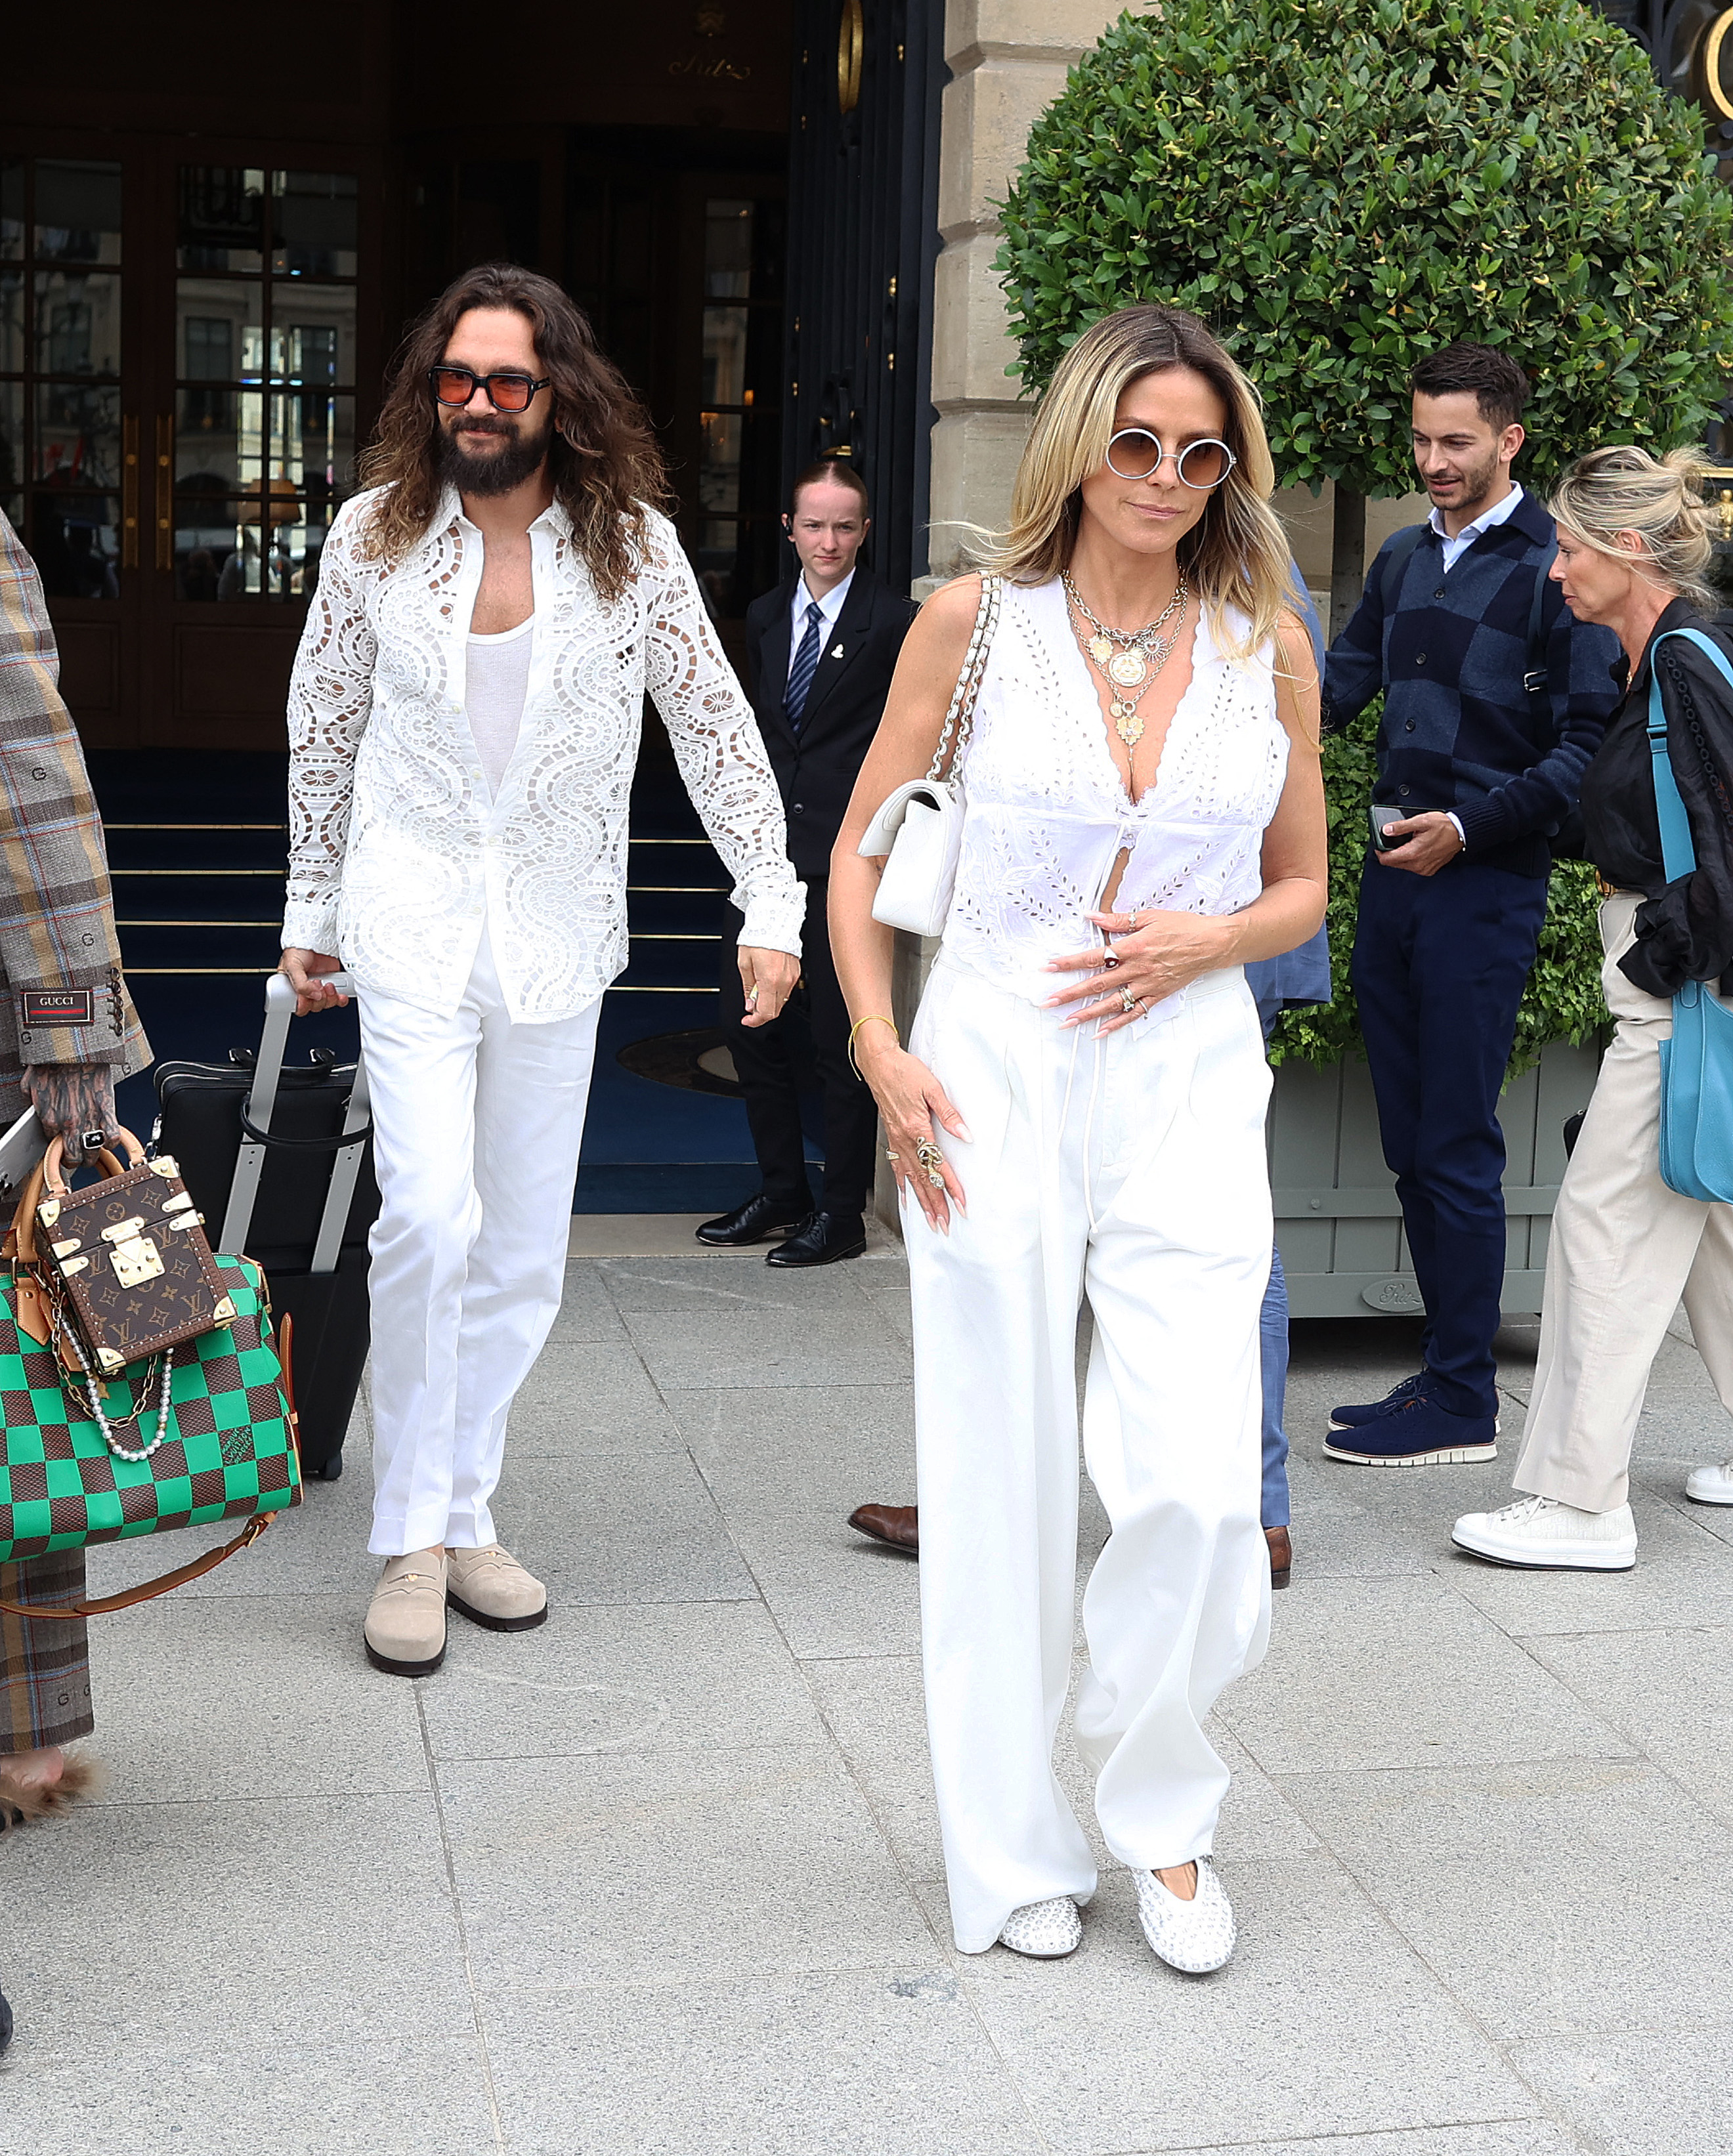 Earlier this week, Heidi Klum and Tom Kaulitz were spotted leaving their hotel in Paris, France